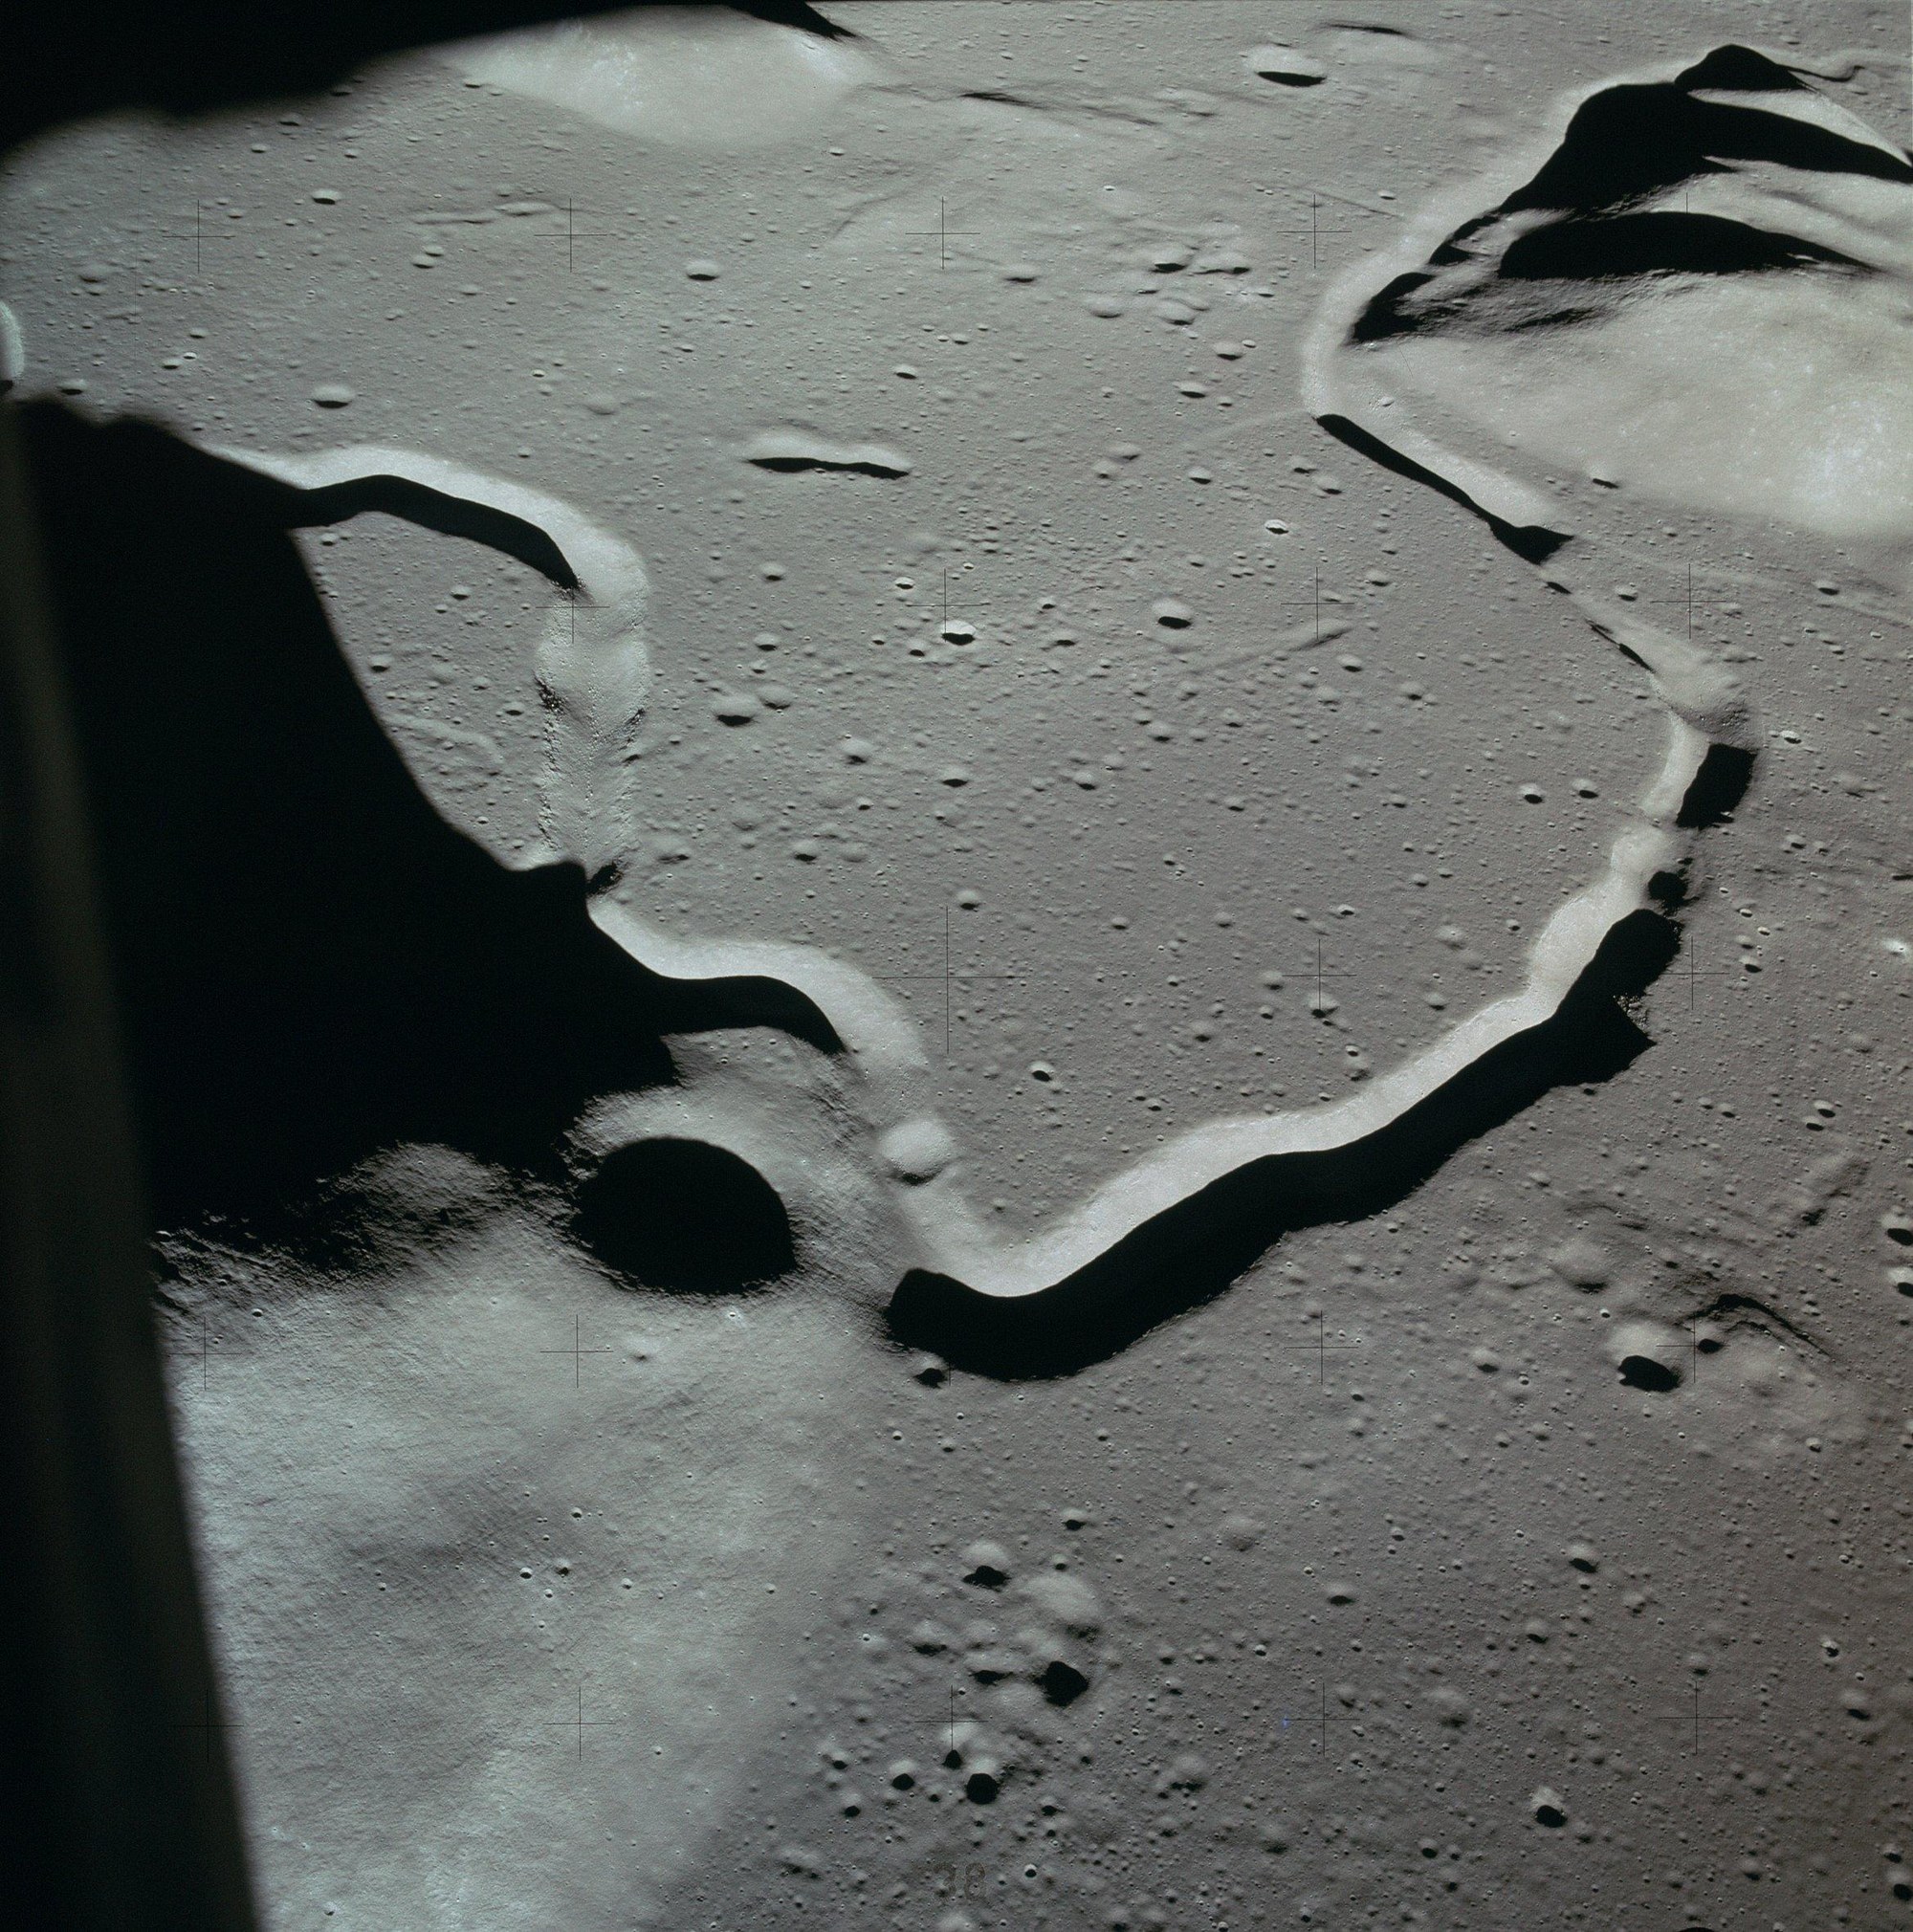 Hadley Rille on the Moon